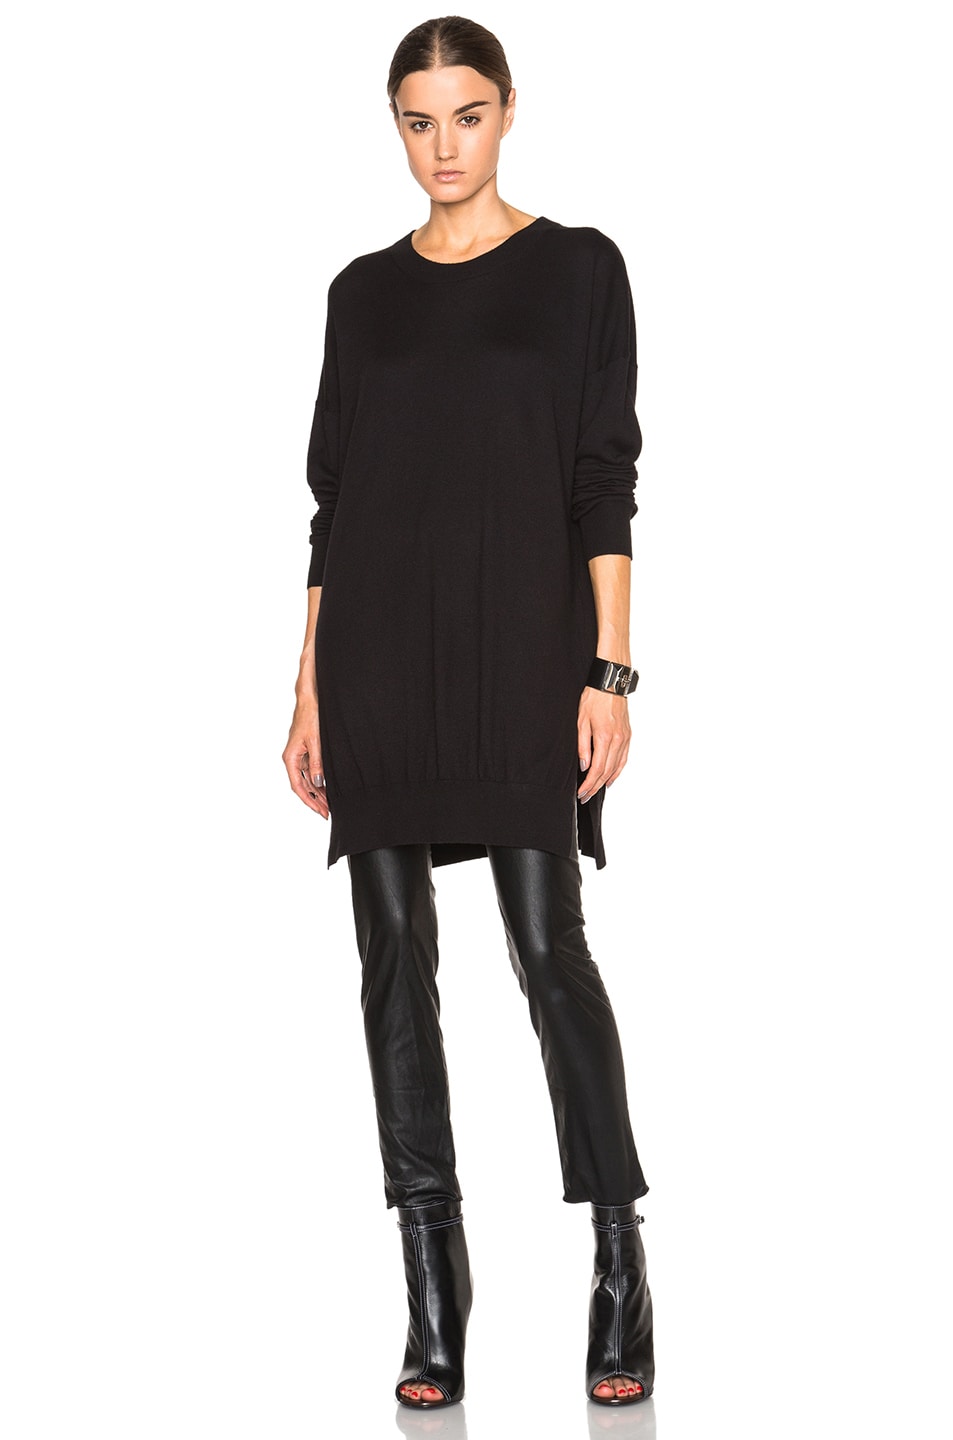 Raquel Allegra Oversize Tunic sweater in Black | FWRD